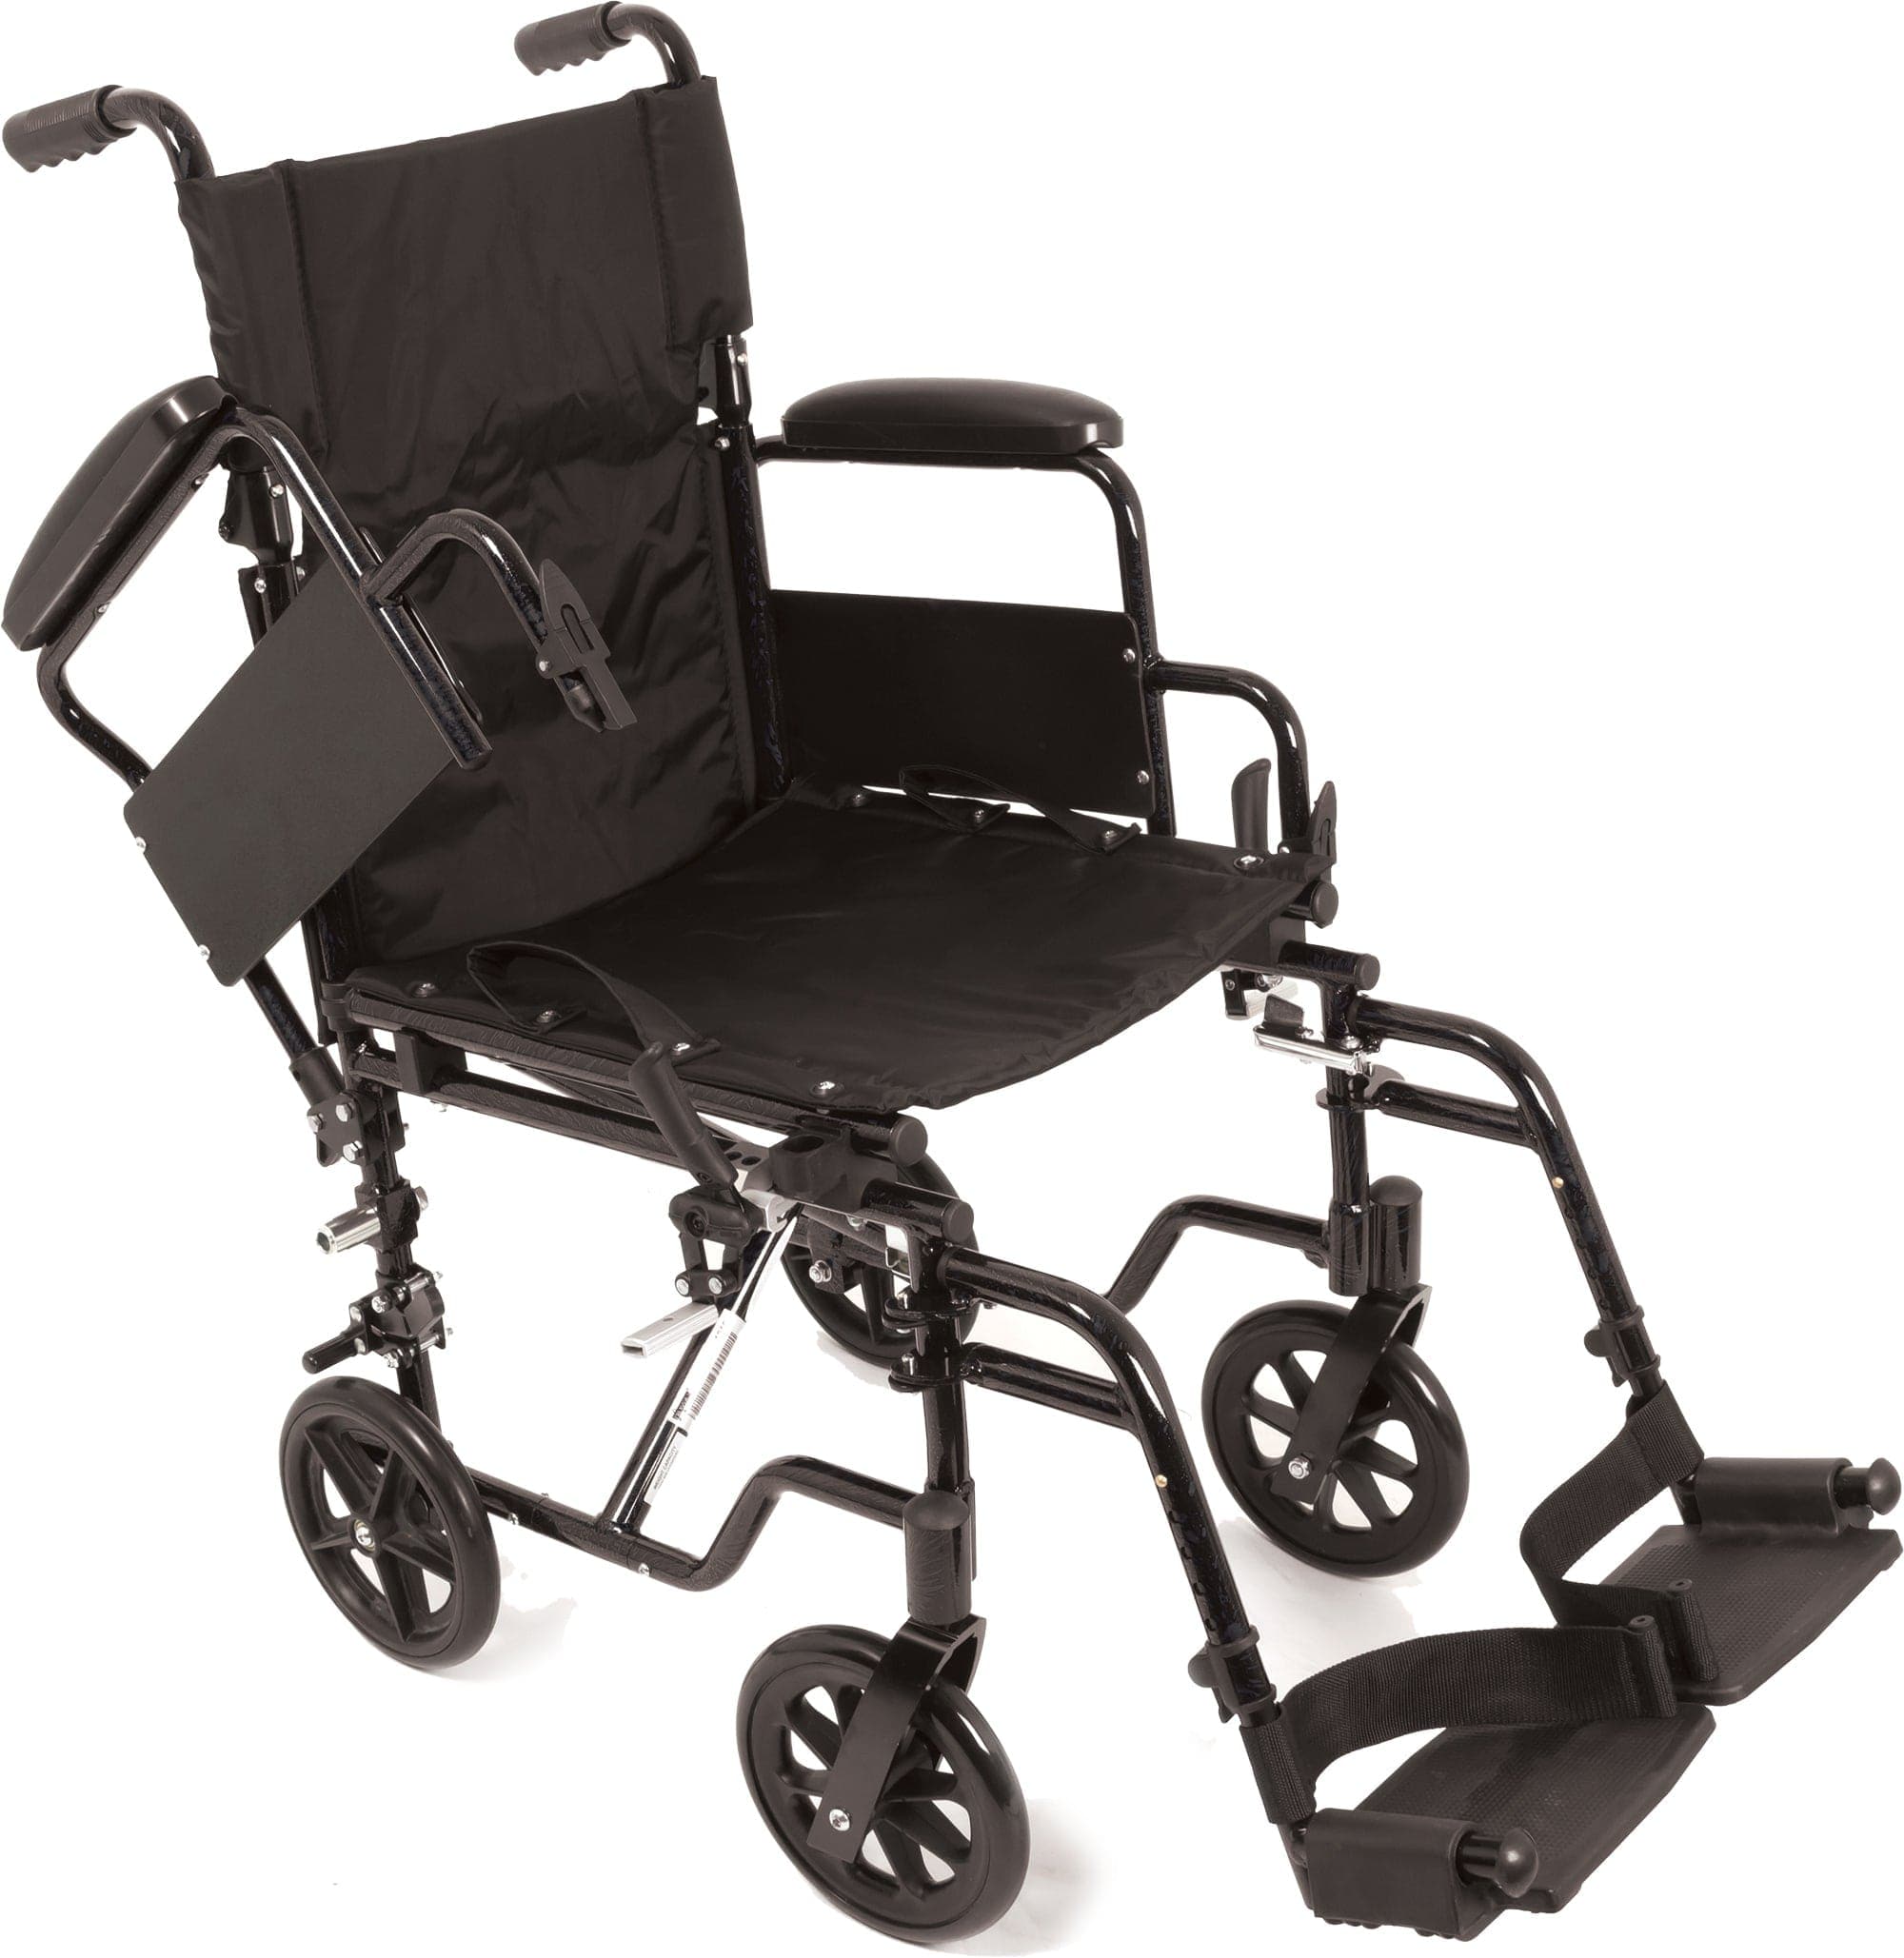 Compass Health K4 Wheelchairs Compass Health ProBasics K4 Transformer Wheelchair with 18" x 16" Seat,